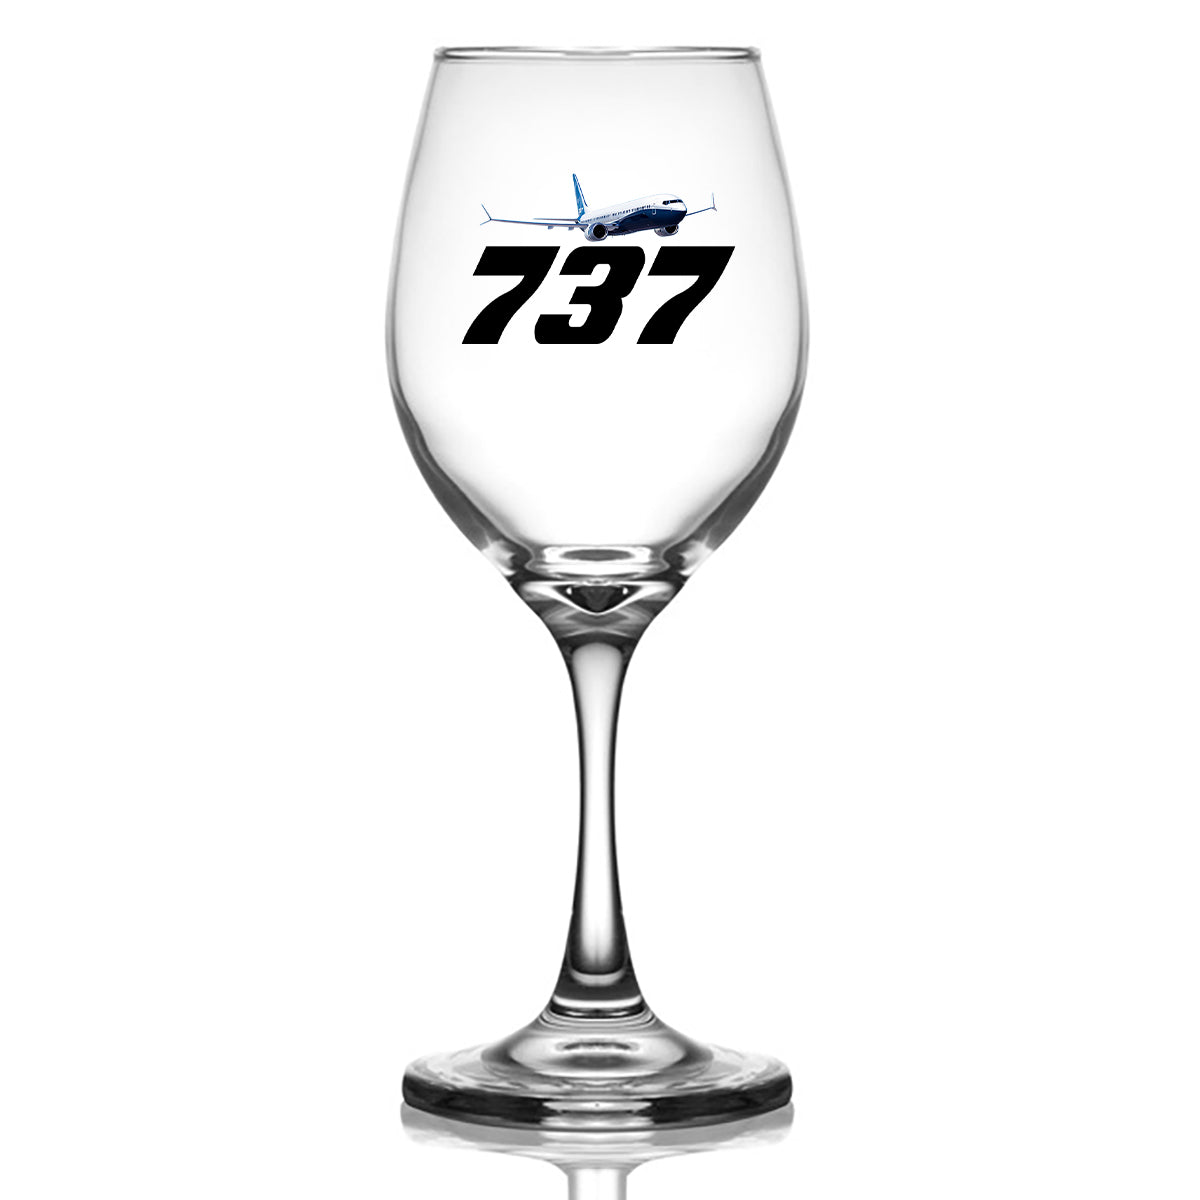 Super Boeing 737-800 Designed Wine Glasses